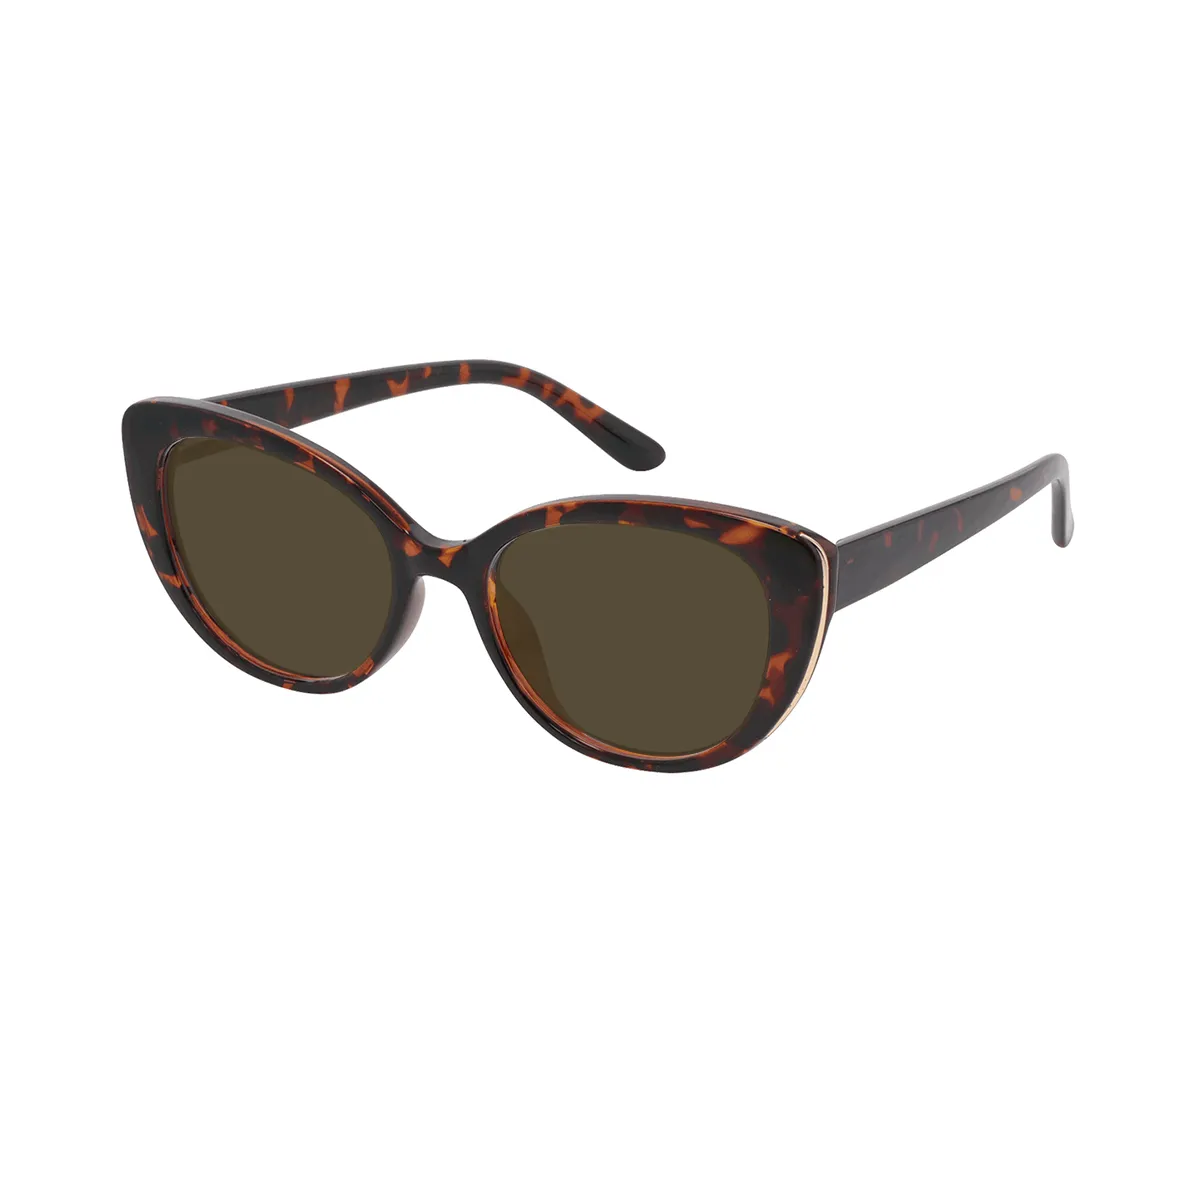 Heather - Cat-eye Tortoiseshell Sunglasses for Women